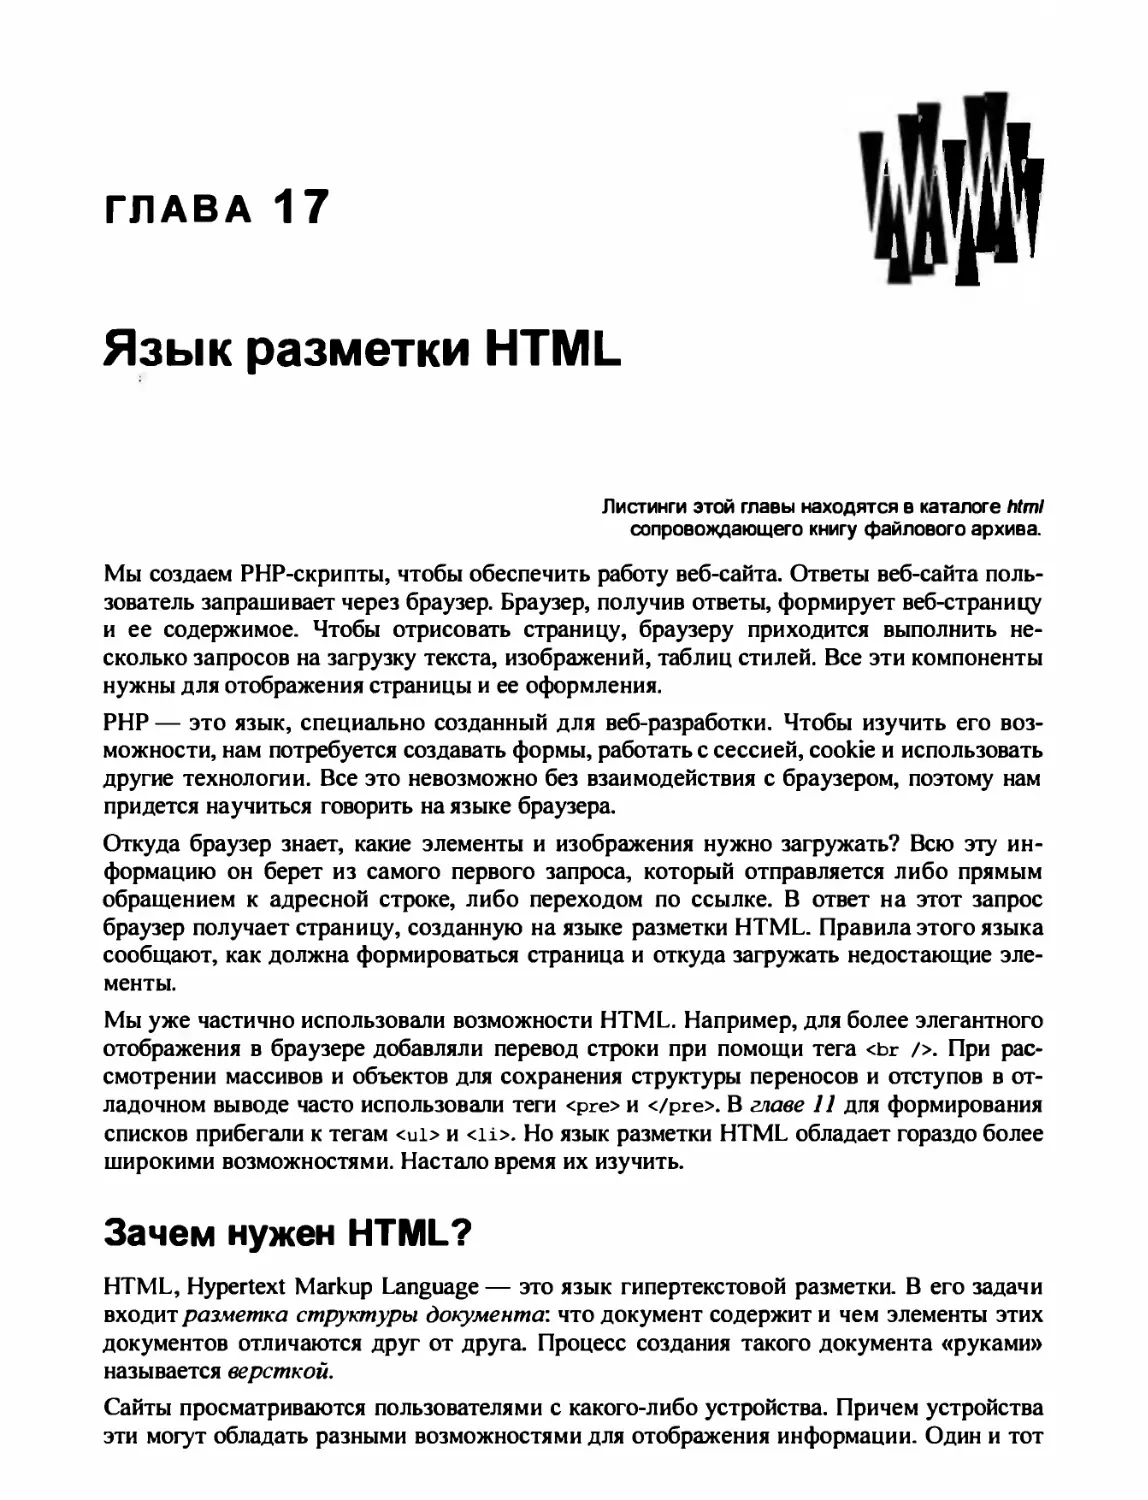 17. Язык разметки HTML